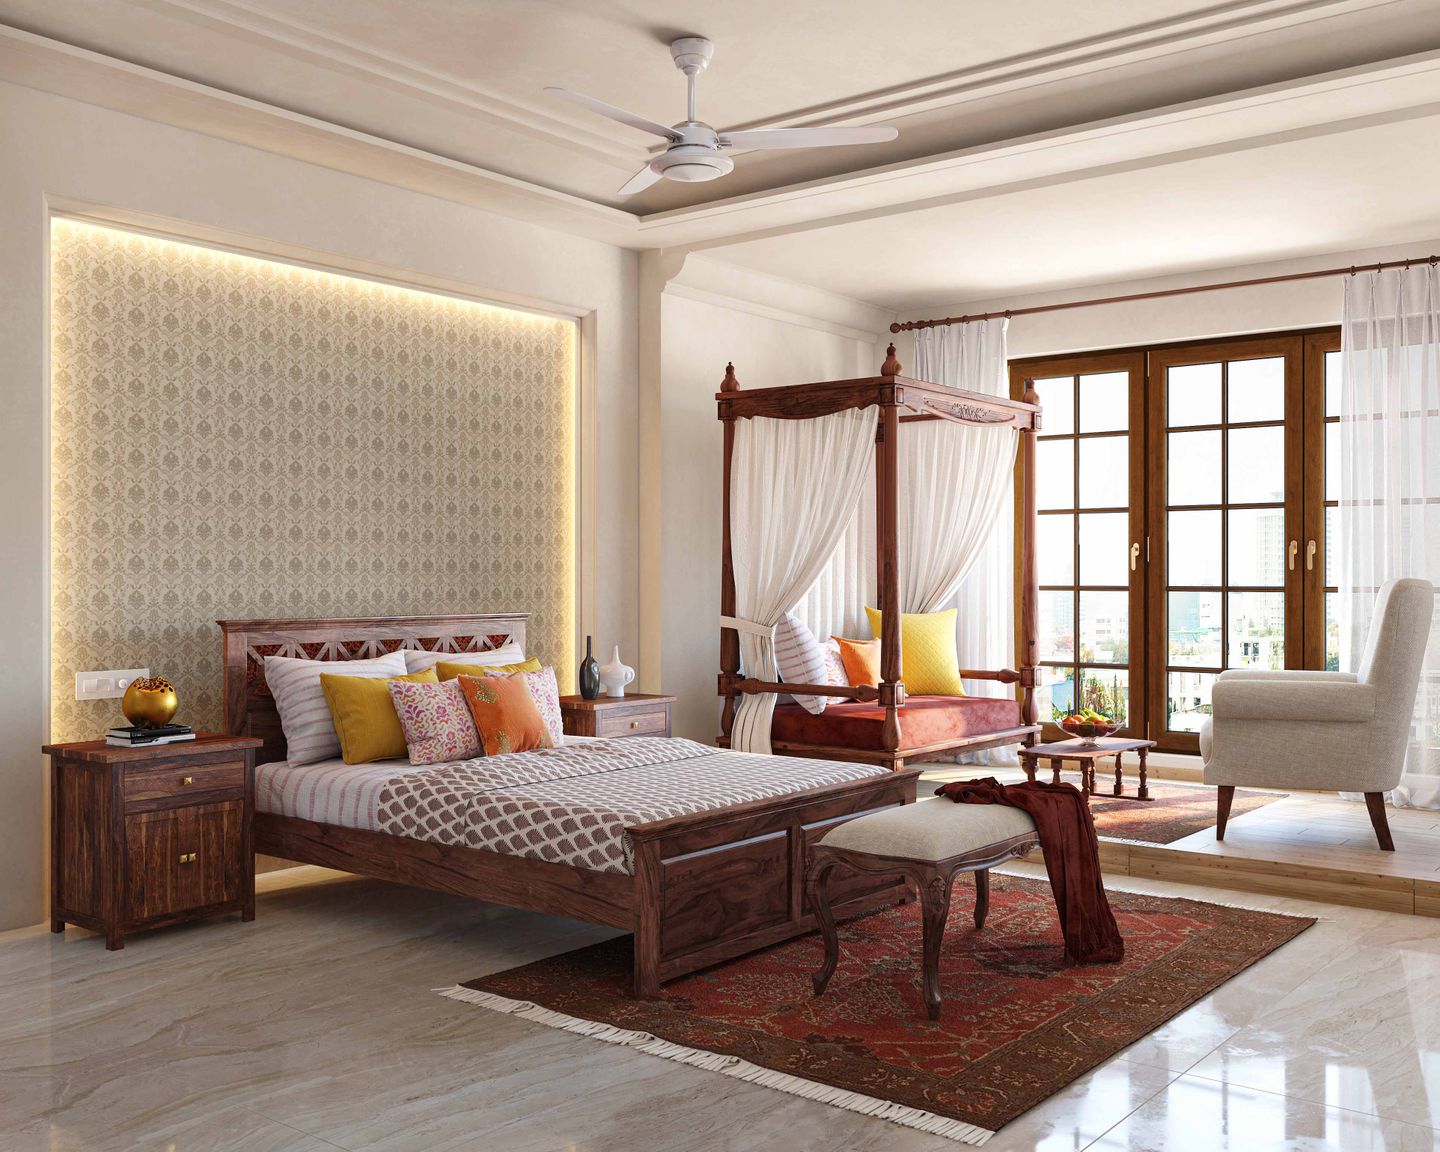 15x14 Ft Master Bedroom Design With Beige Damask Wallpaper And Wooden Furntiture - Livspace